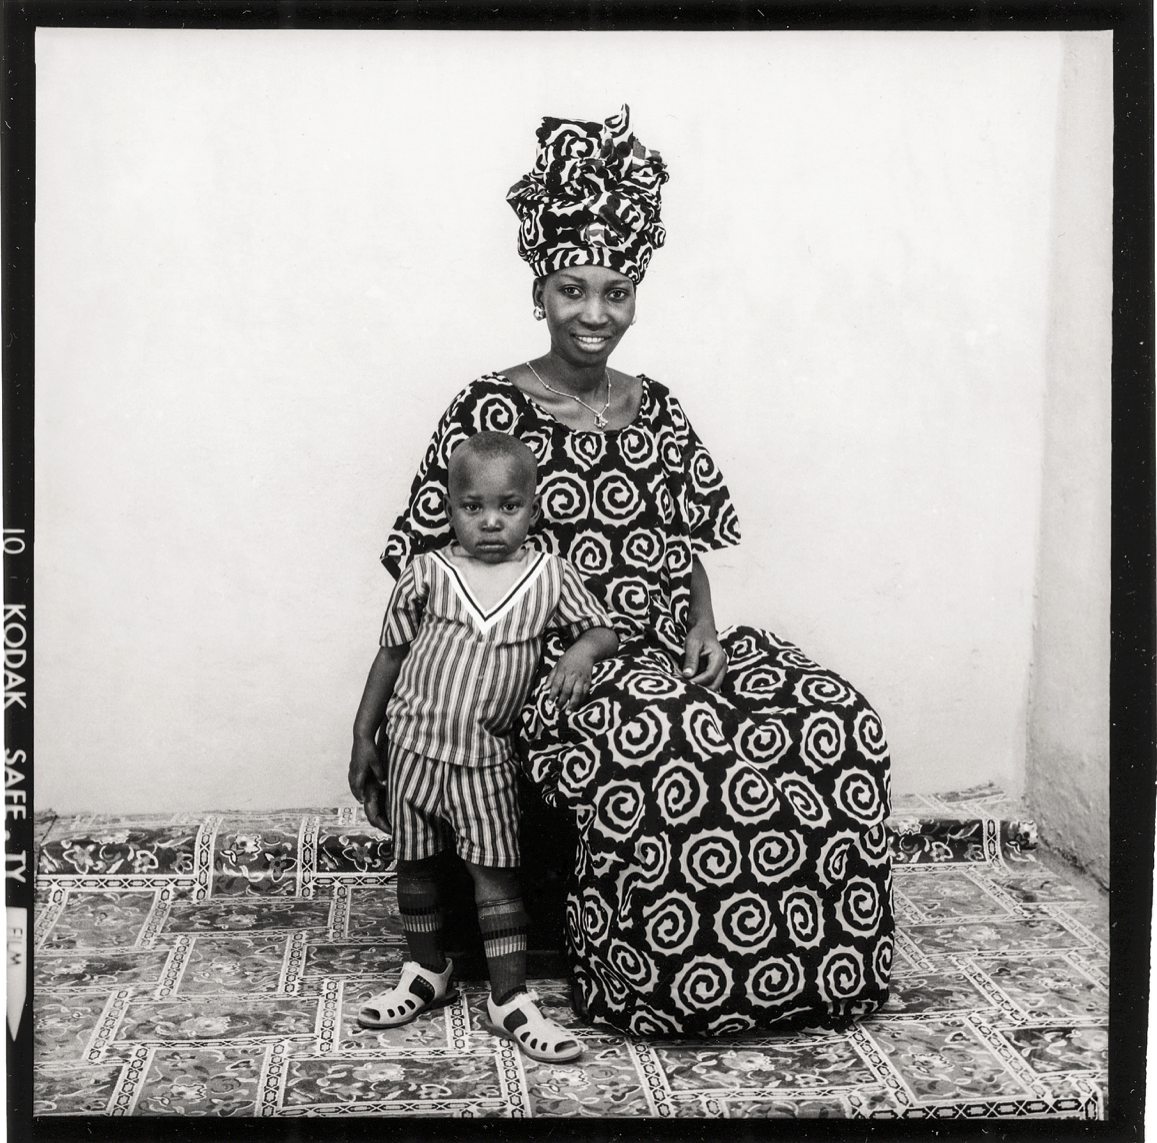 Africa’s Future through the Lens of Malick Sidibé